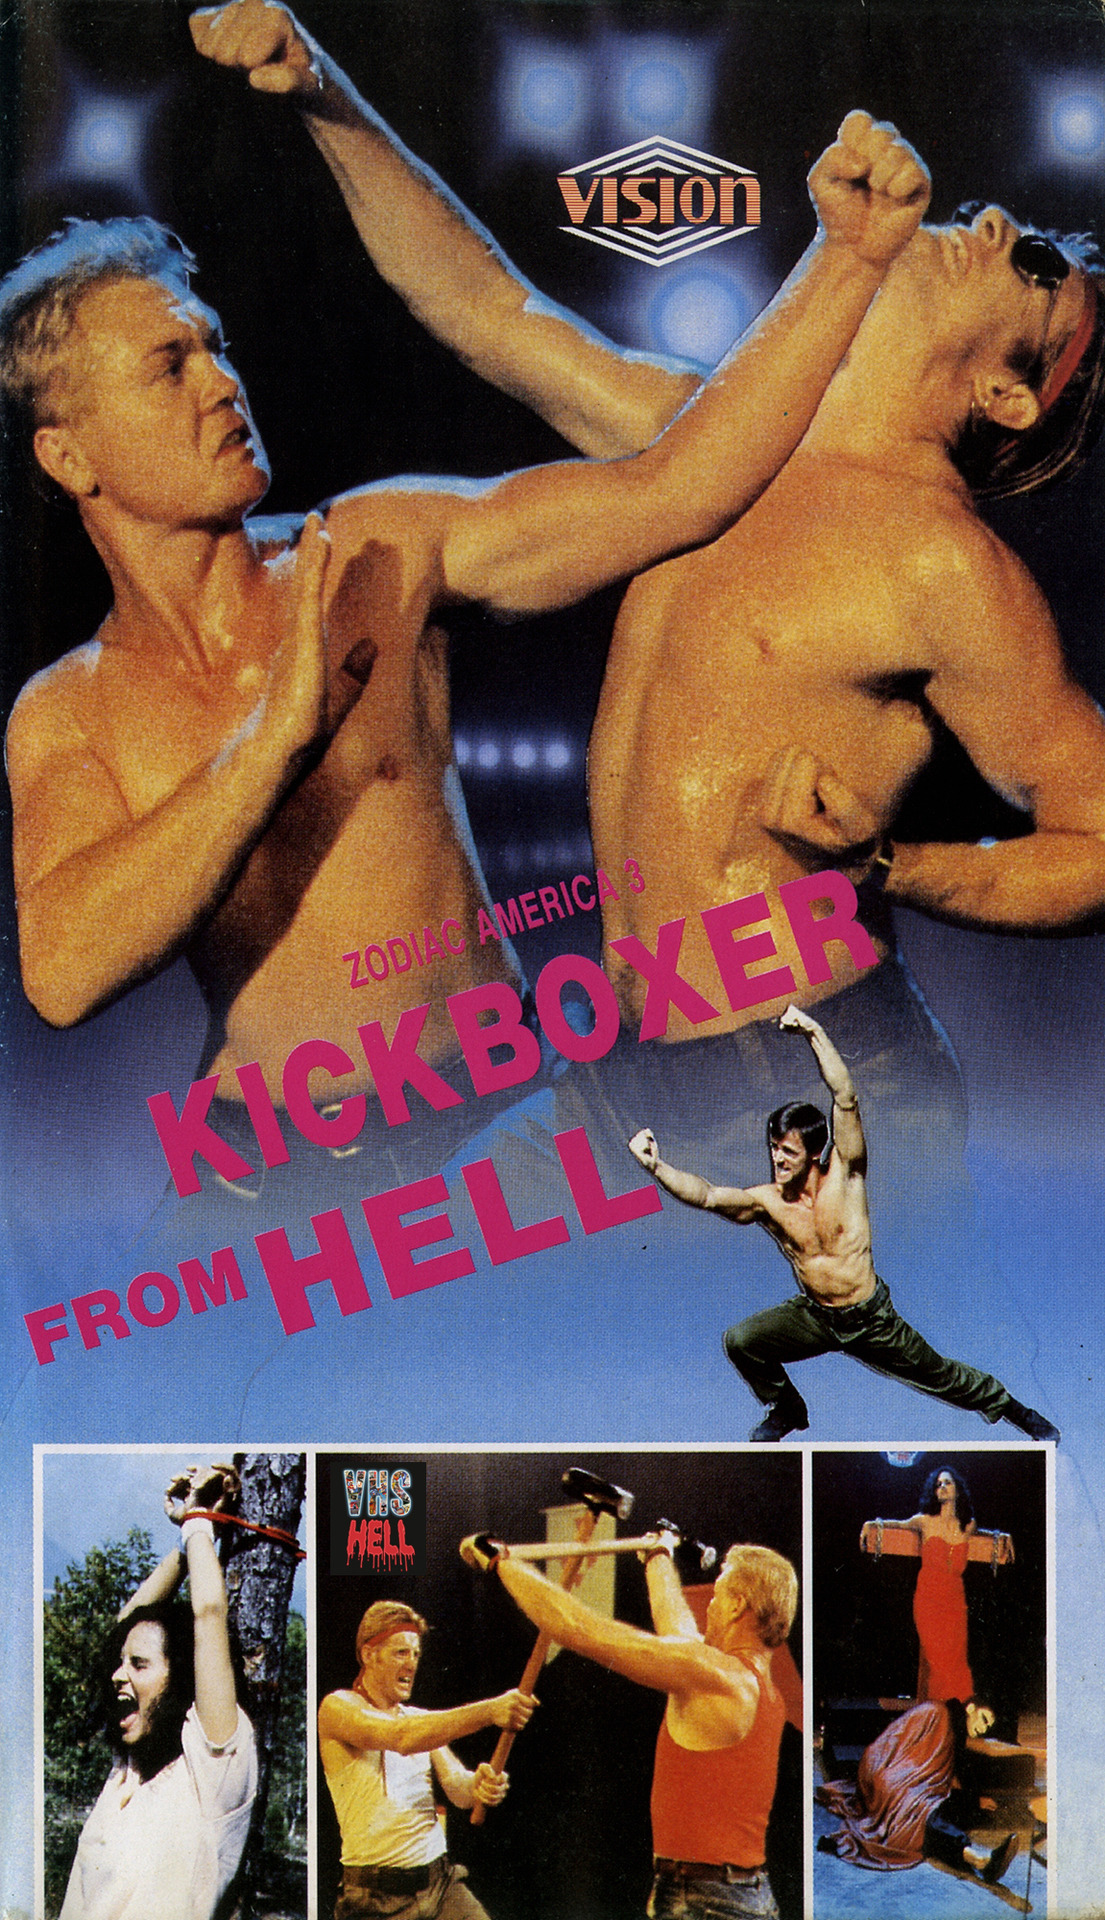 Kickboxer from Hell (1990) Screenshot 3 